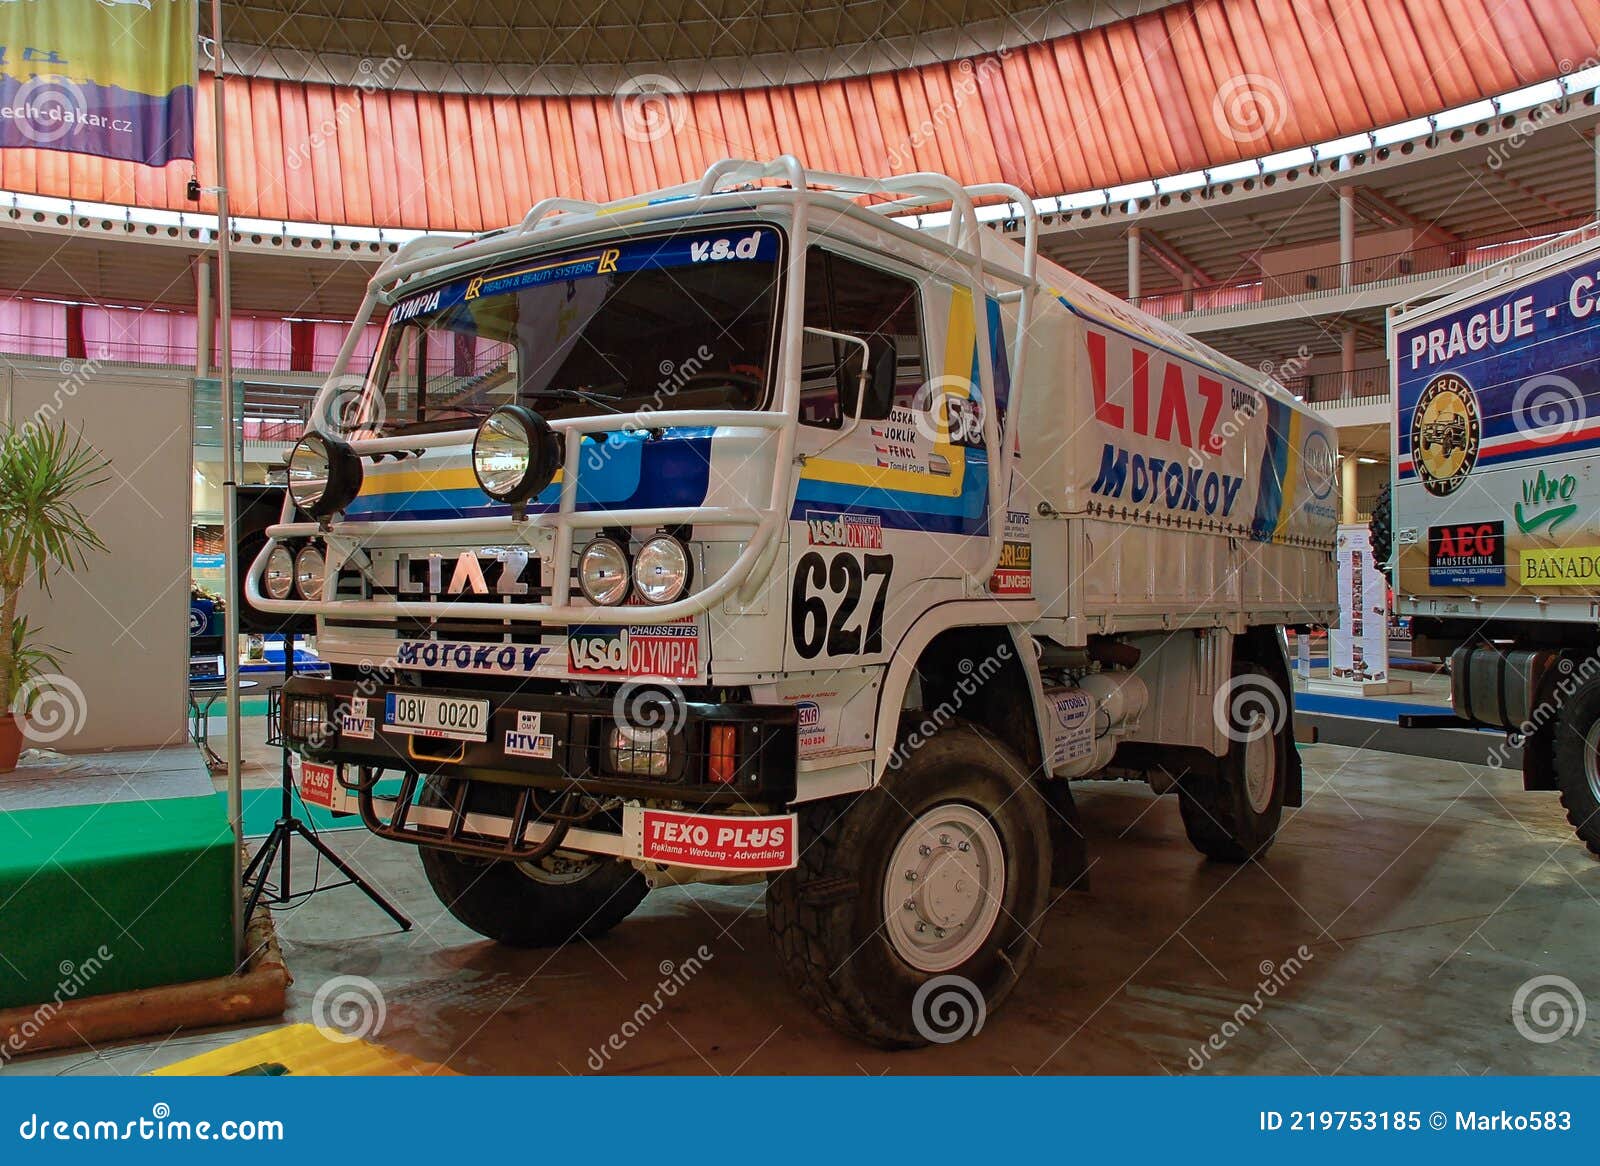 LIAZ 100.55 D 4x4 Paris-Dakar Race Truck Editorial Photo ...